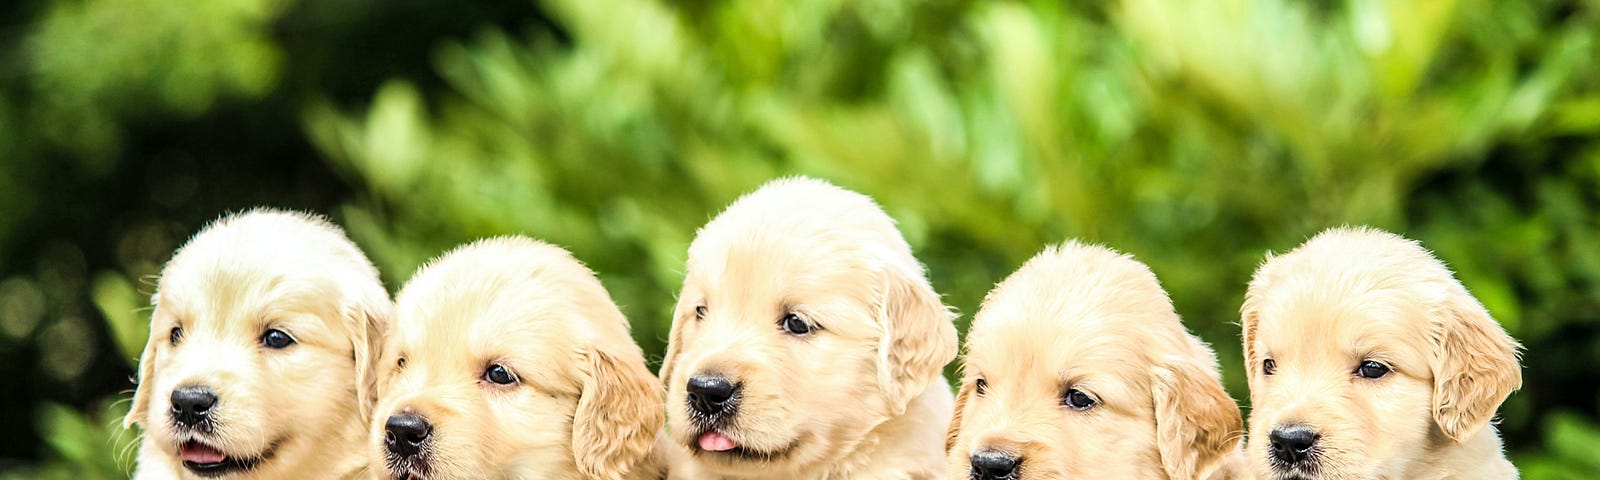 Five Golden Retriever puppies in a row.